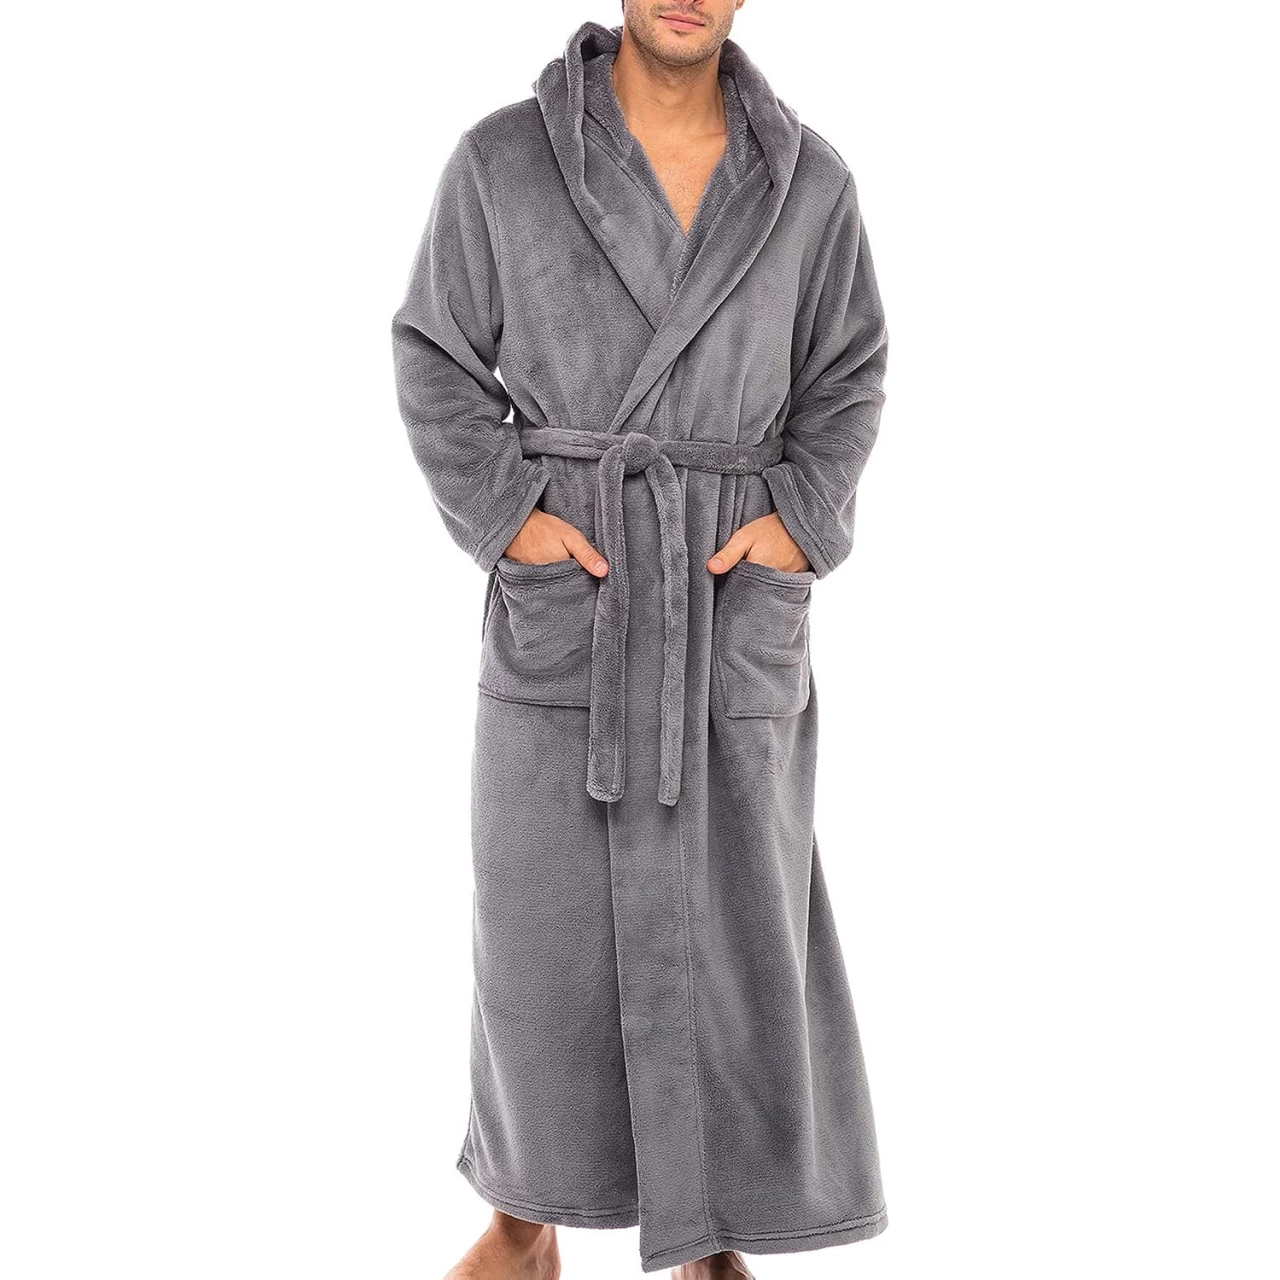 Alexander Del Rossa Men&rsquo;s Soft Plush Fleece Hooded Bathrobe, Full Length Long Warm Lounge Robe with Hood